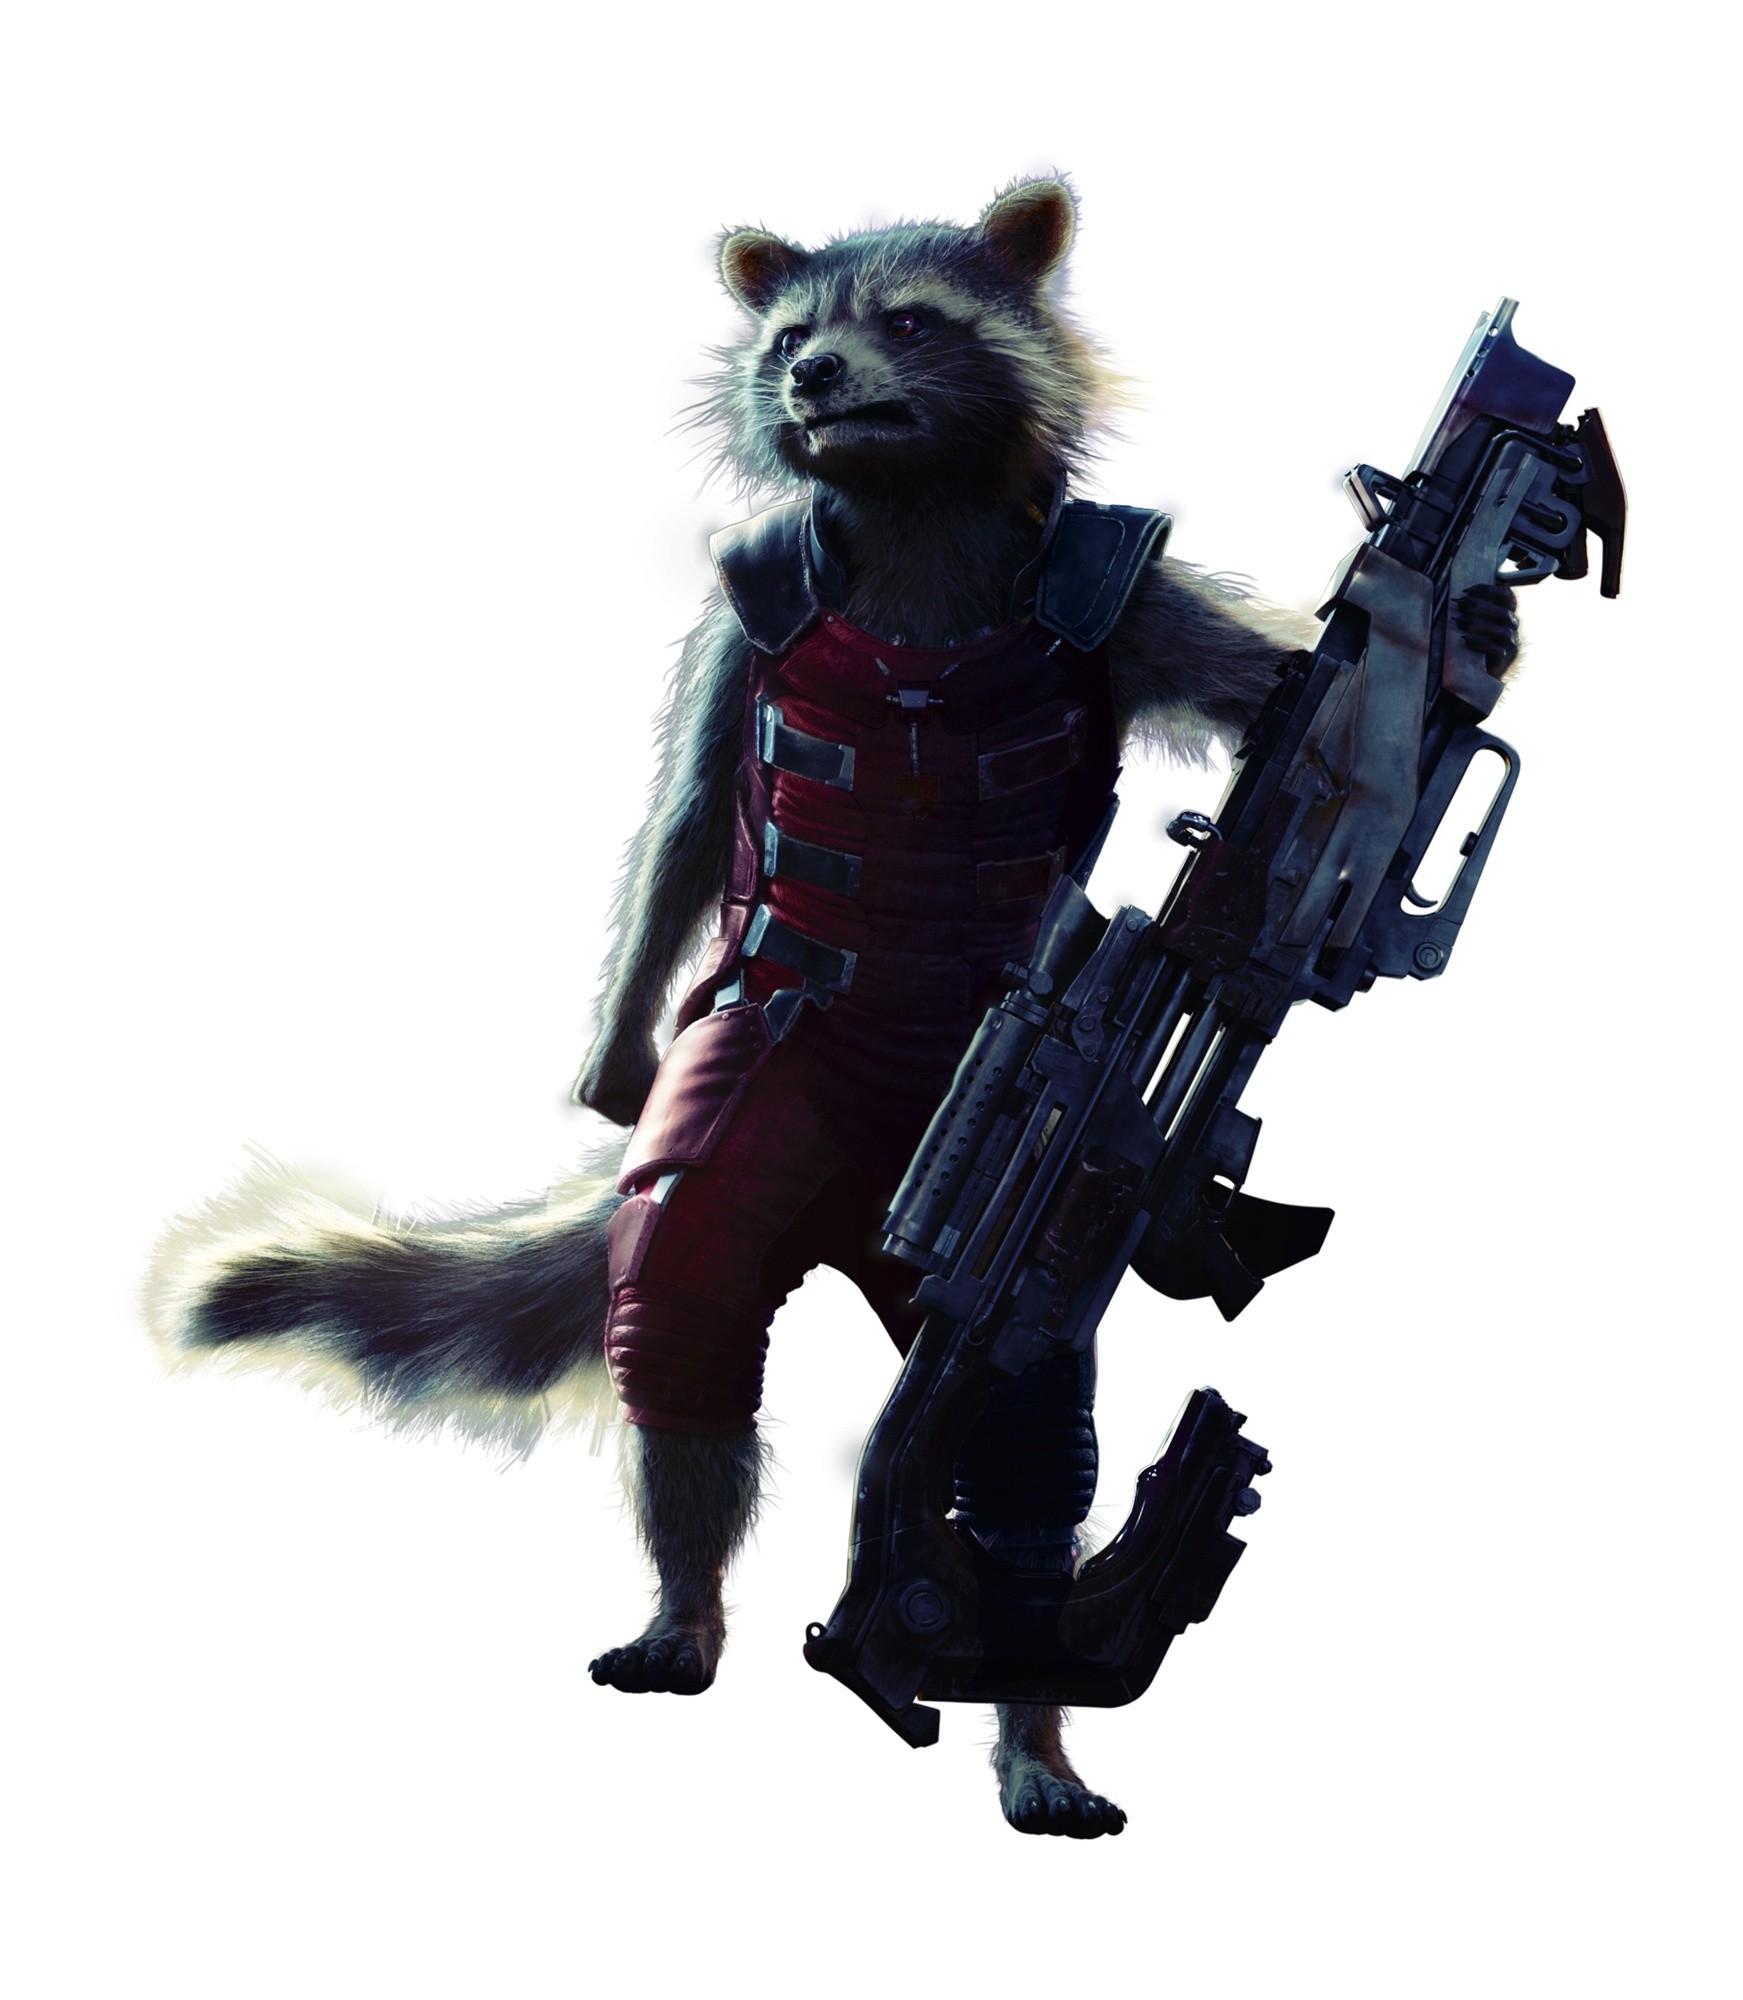 Rocket Raccoon from Marvel Studios' Guardians of the Galaxy (2014)